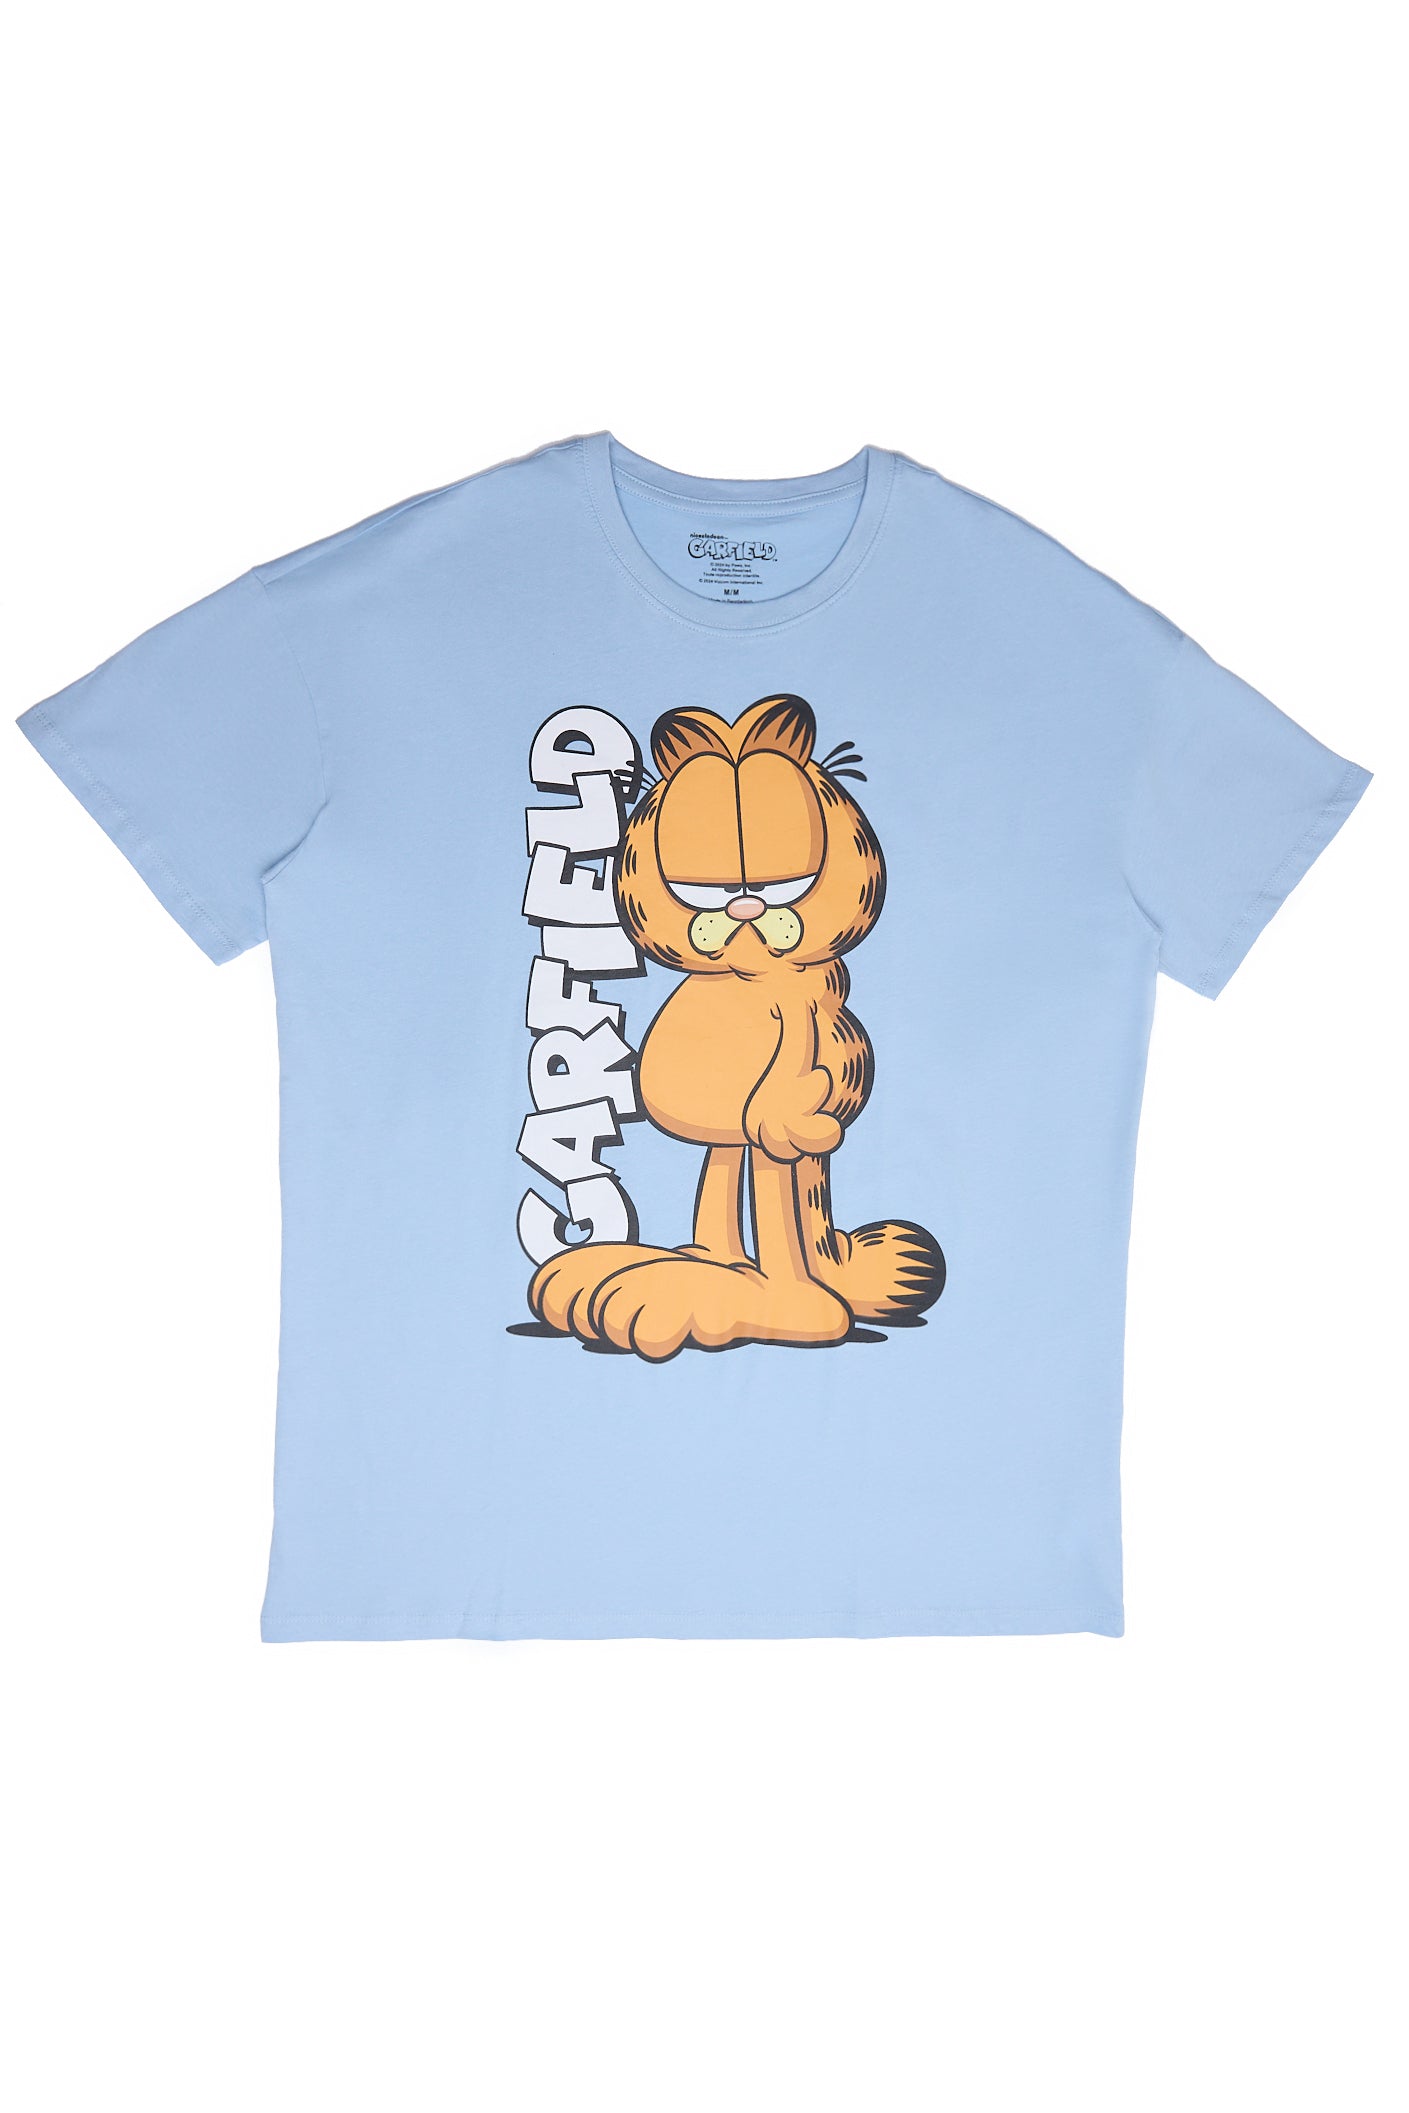 Garfield Sad Graphic Relaxed Tee